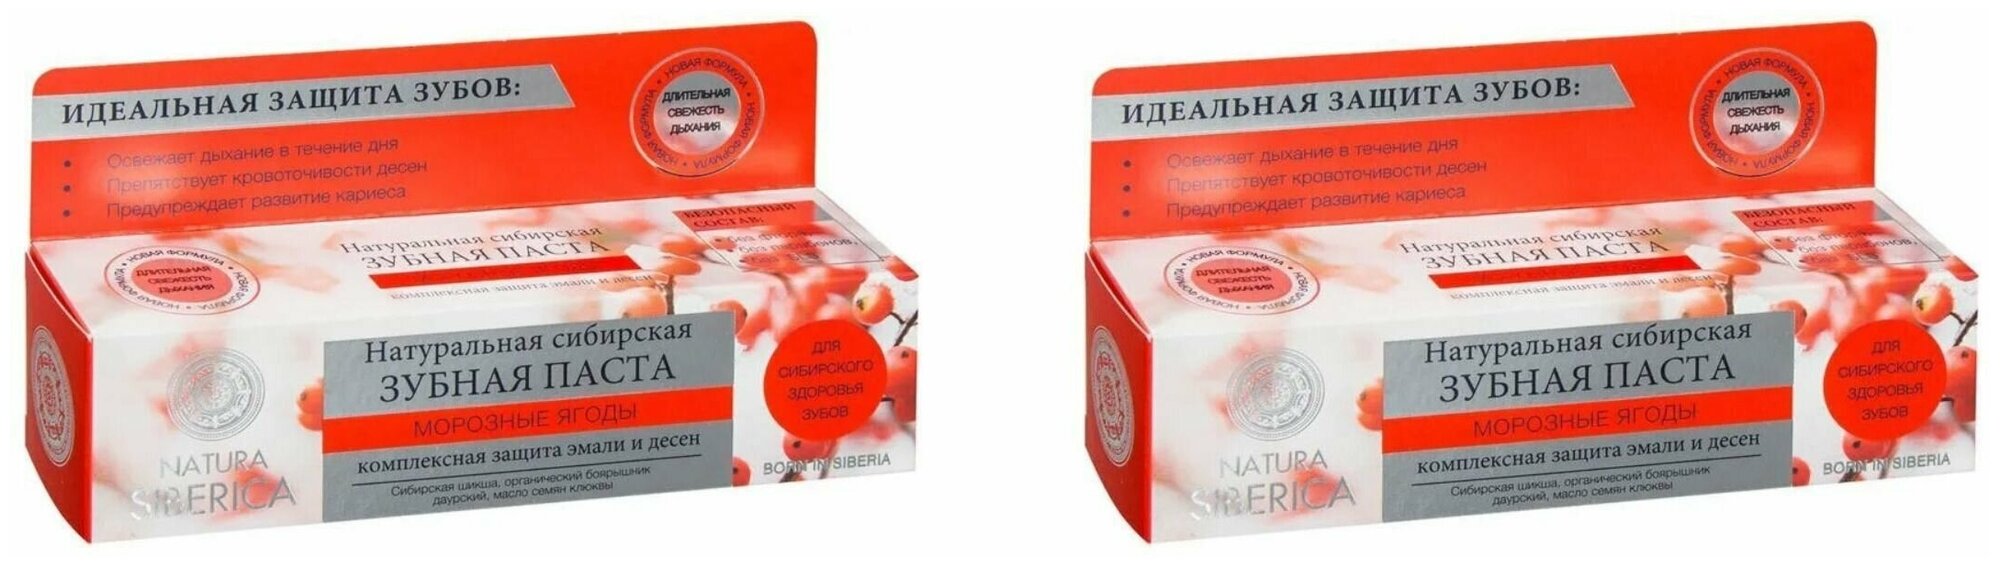 Natura Siberica Зубная паста Морозные ягоды, 100 г, 2 шт